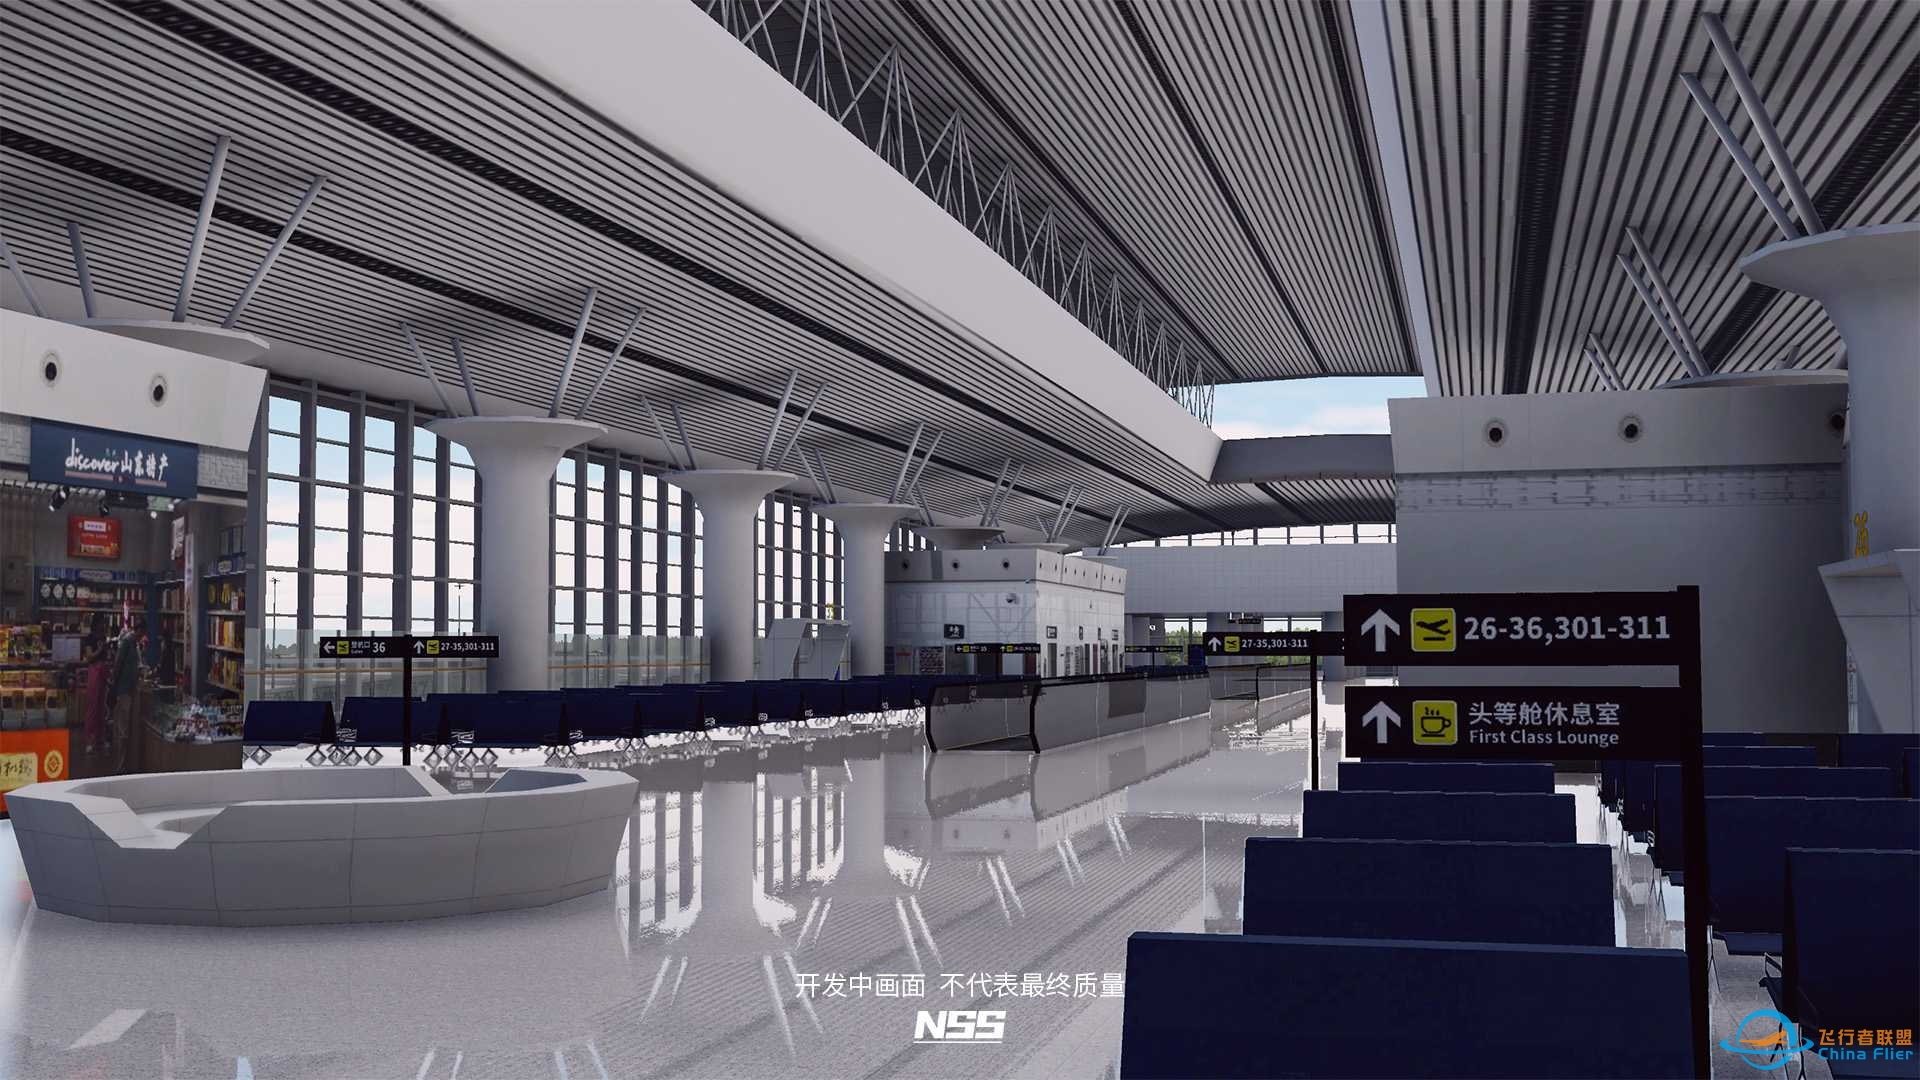 NSS地景开发组 | ZSJN | 济南遥墙国际机场项目最新进展-8332 